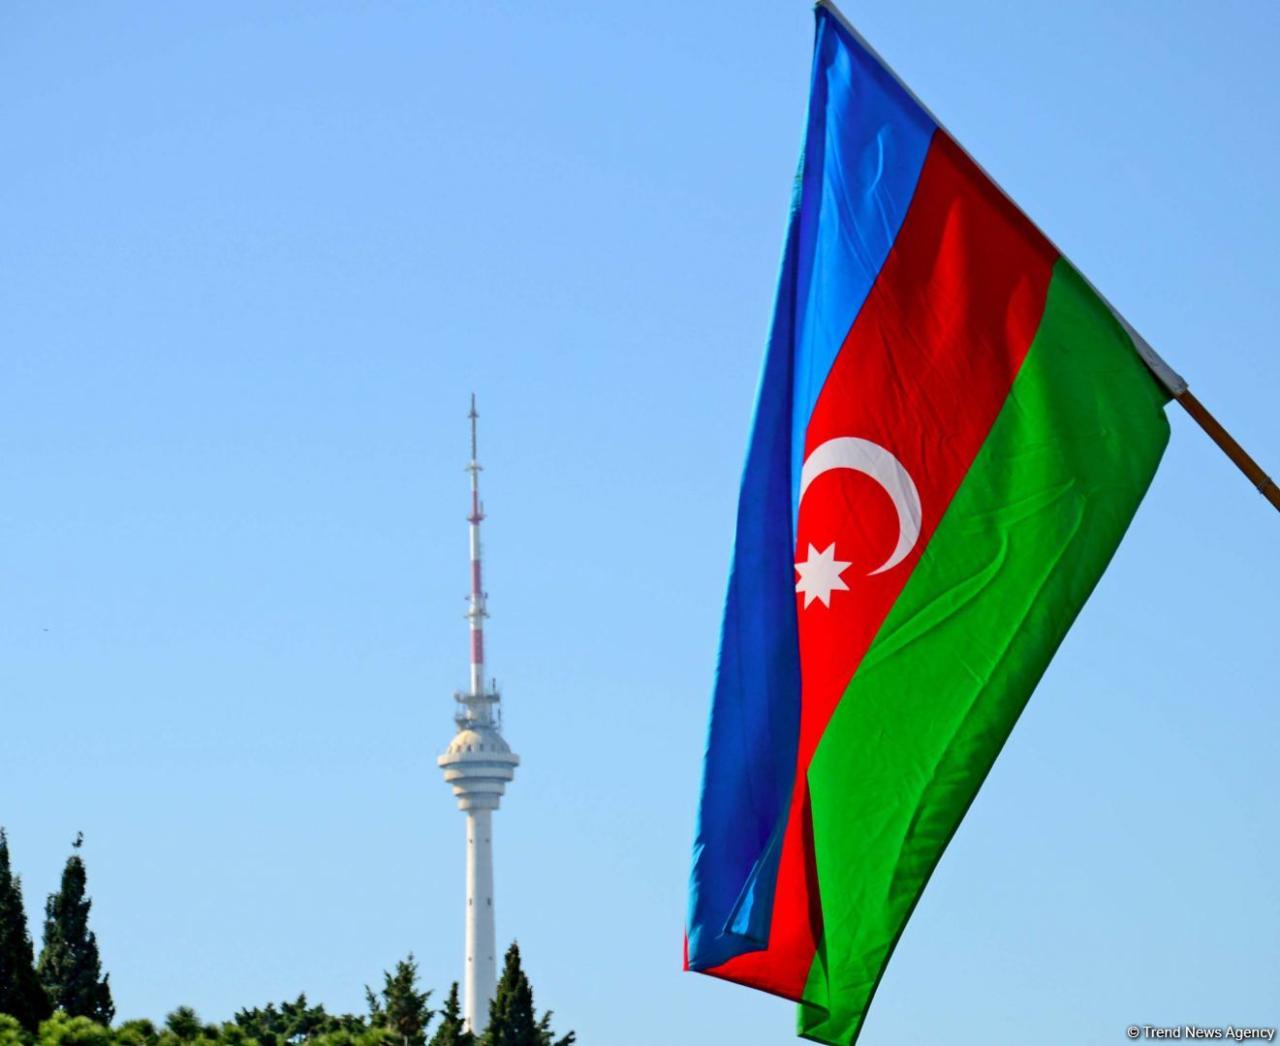 Azerbaijan leader in South Caucasus for military power index